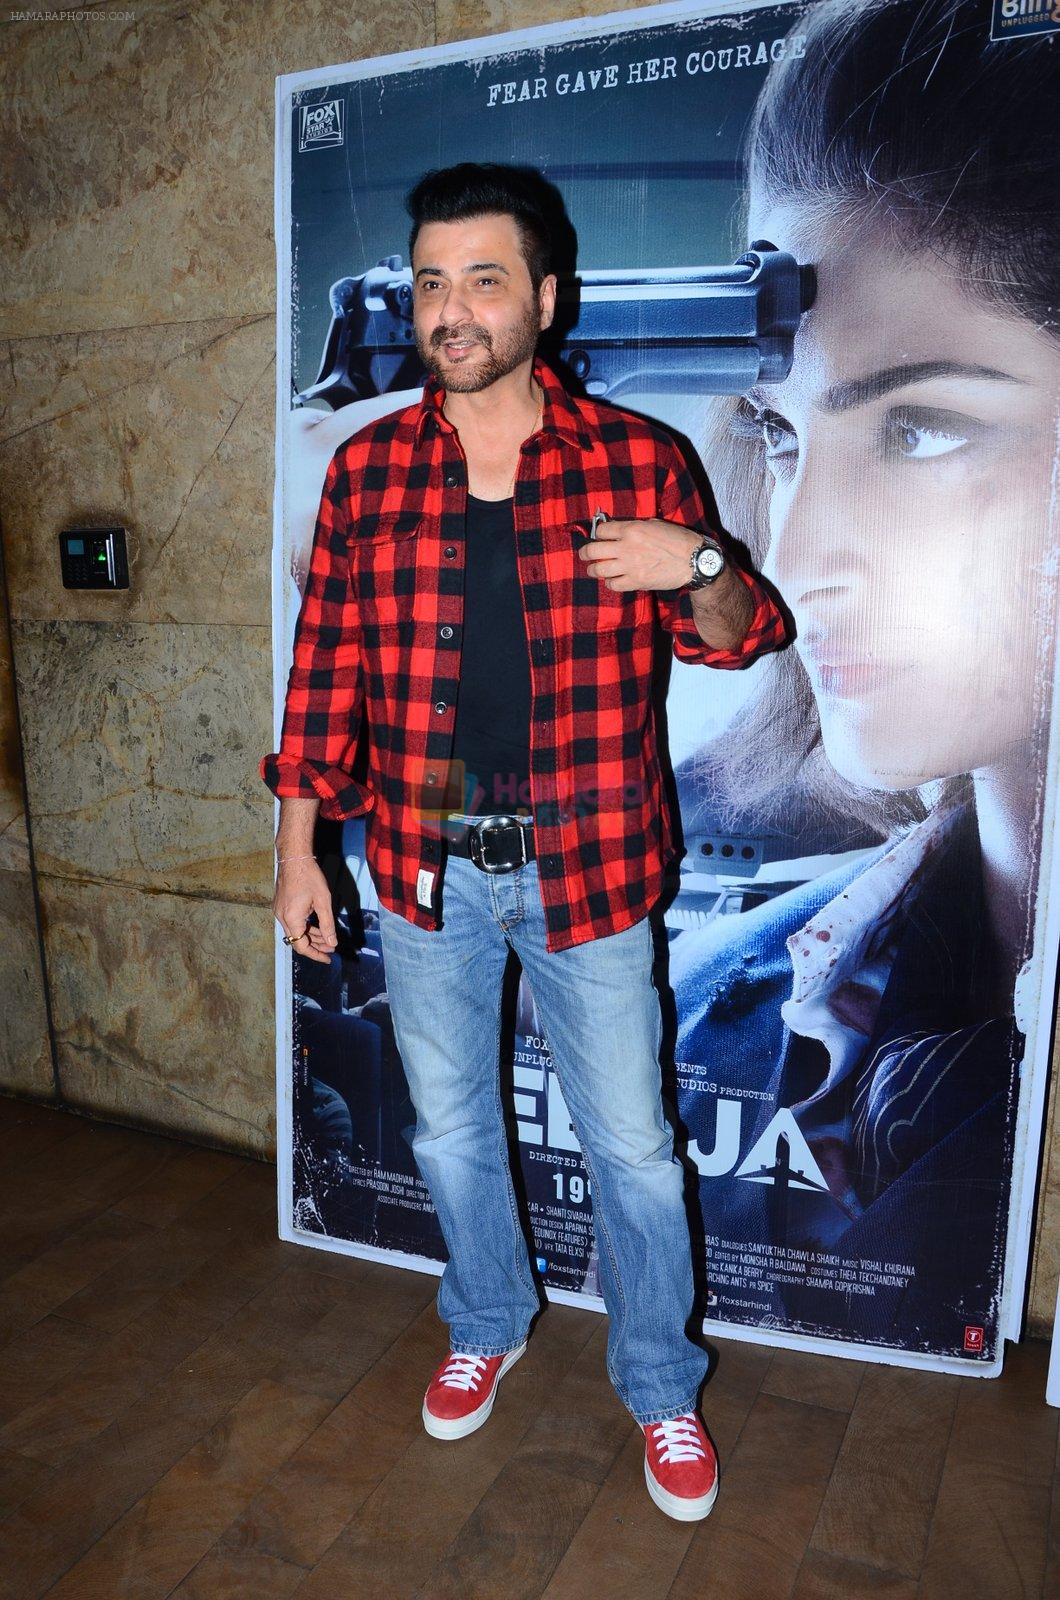 Sanjay Kapoor at Neerja Screening in Mumbai on 15th Feb 2016